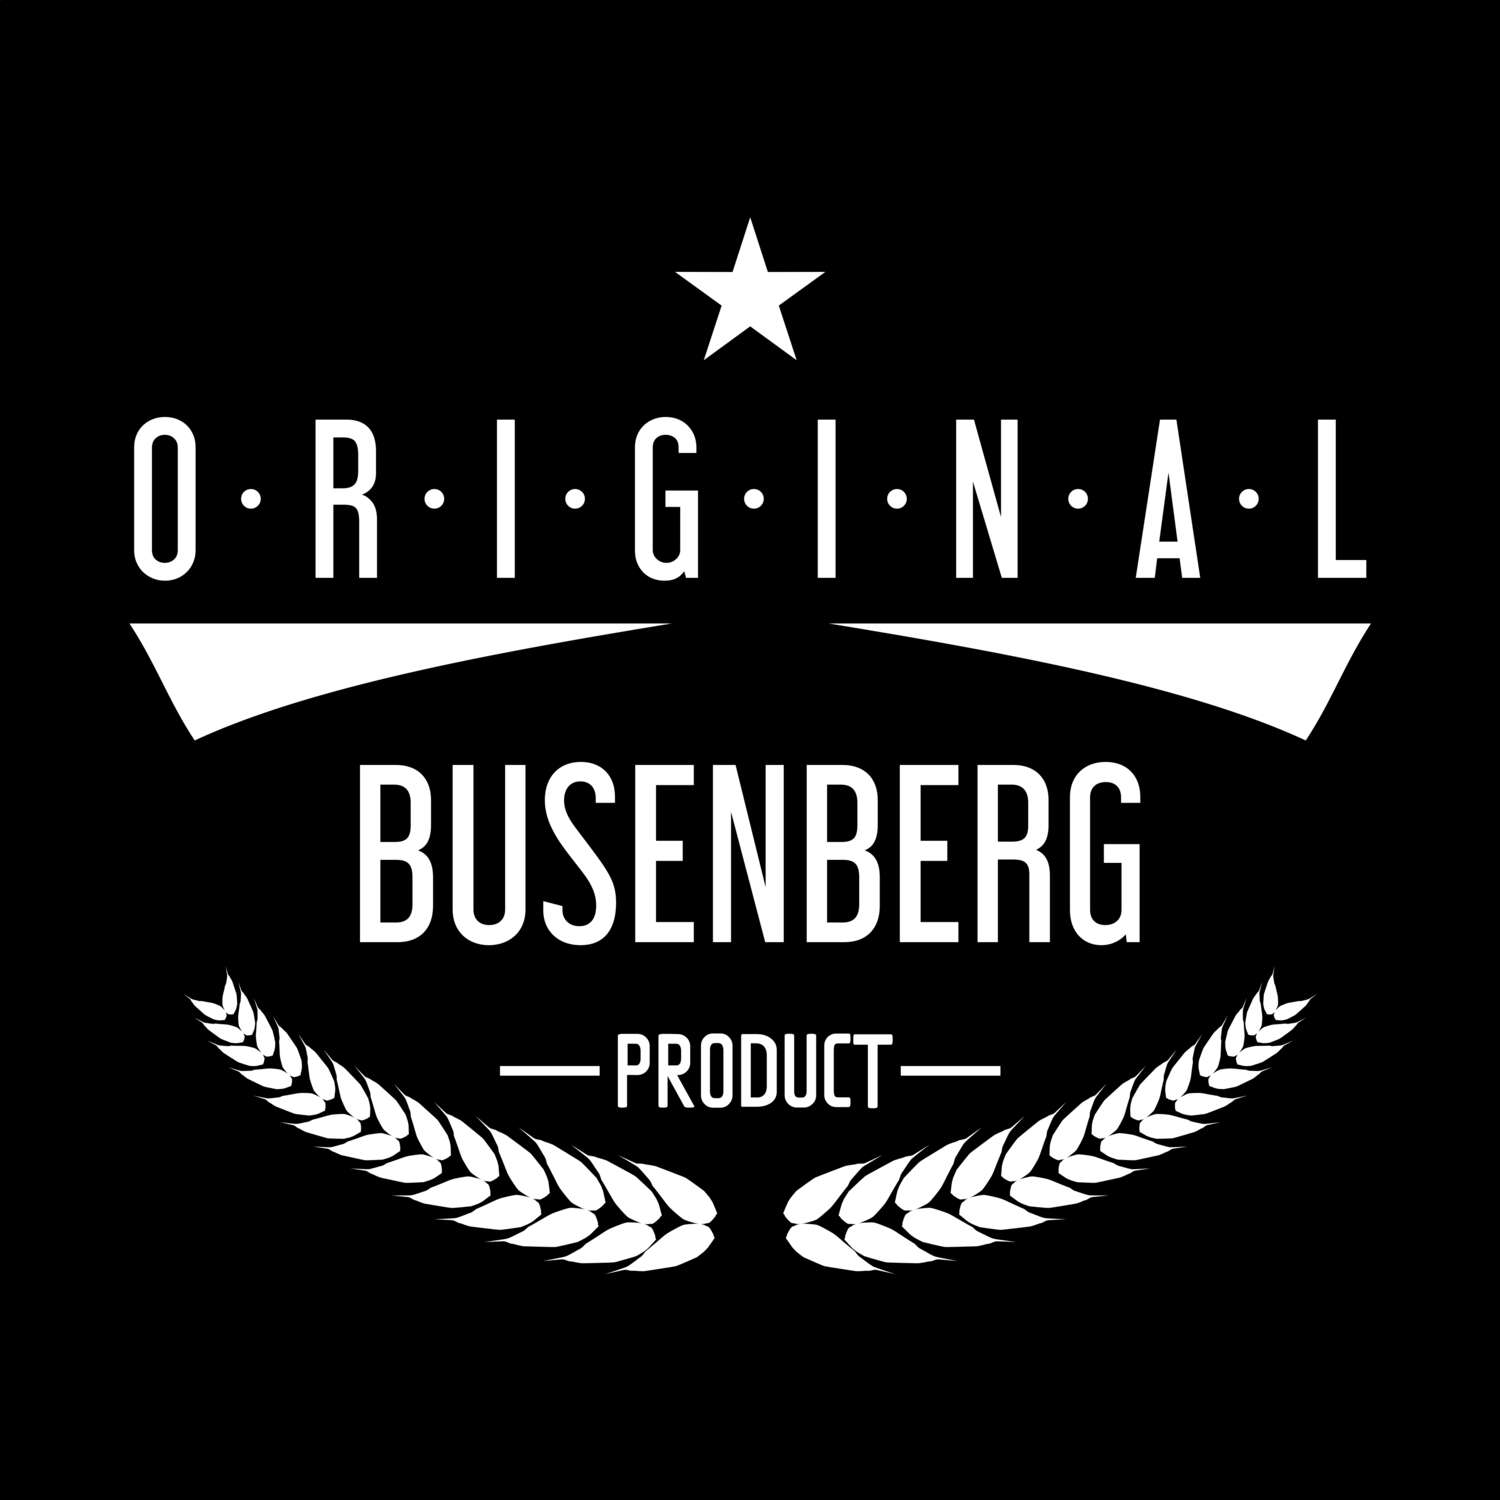 Busenberg T-Shirt »Original Product«